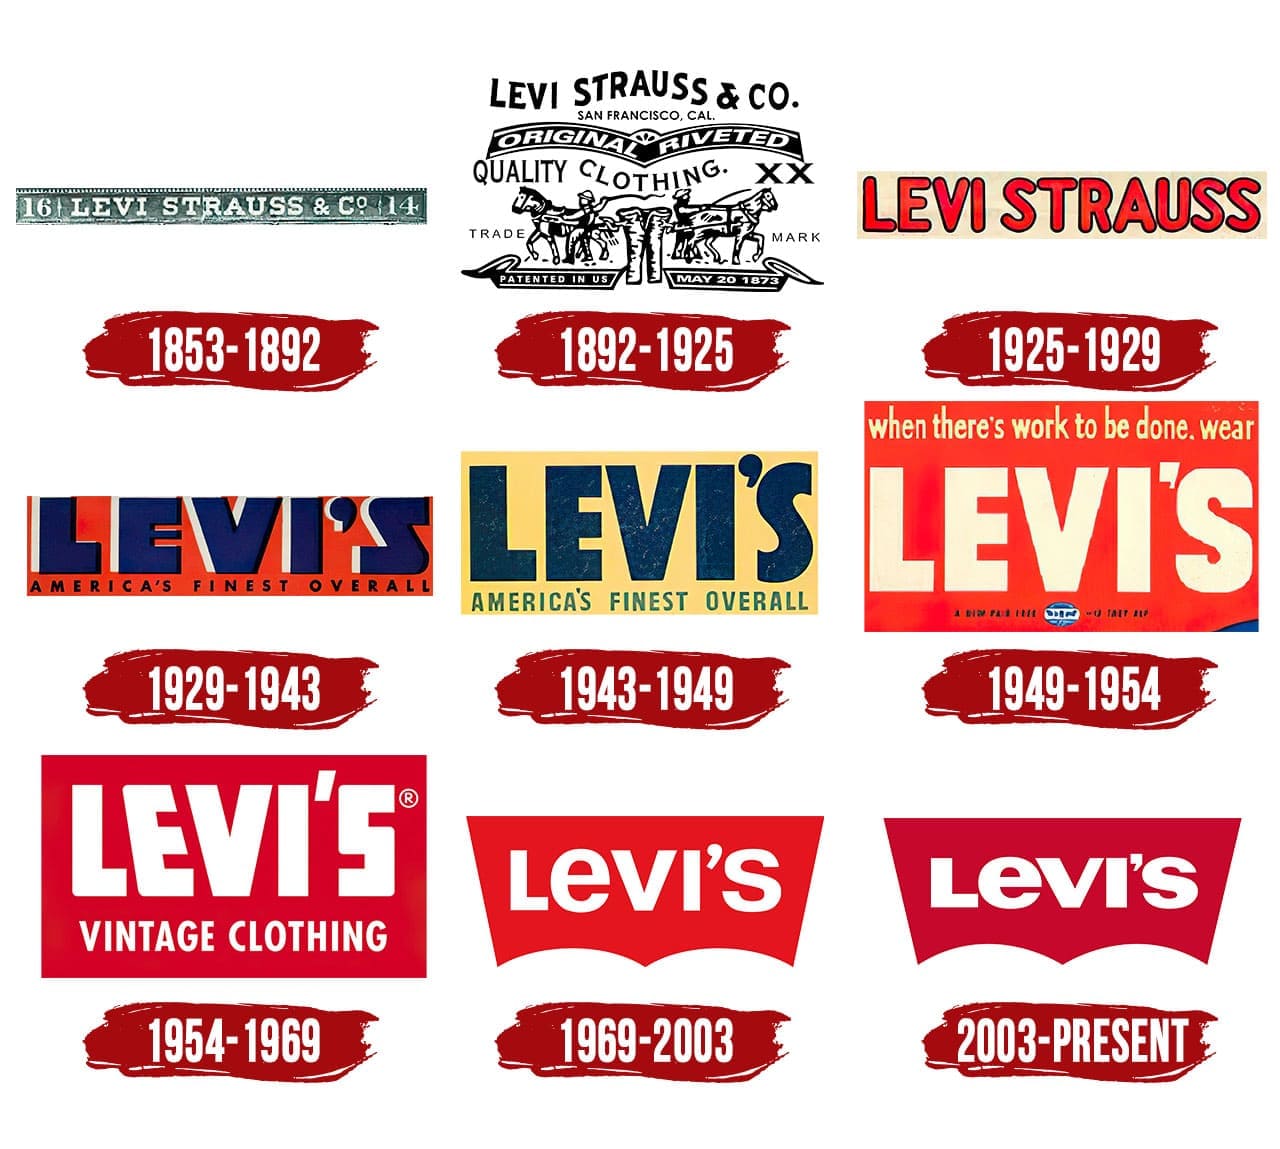 levi's original jeans logo